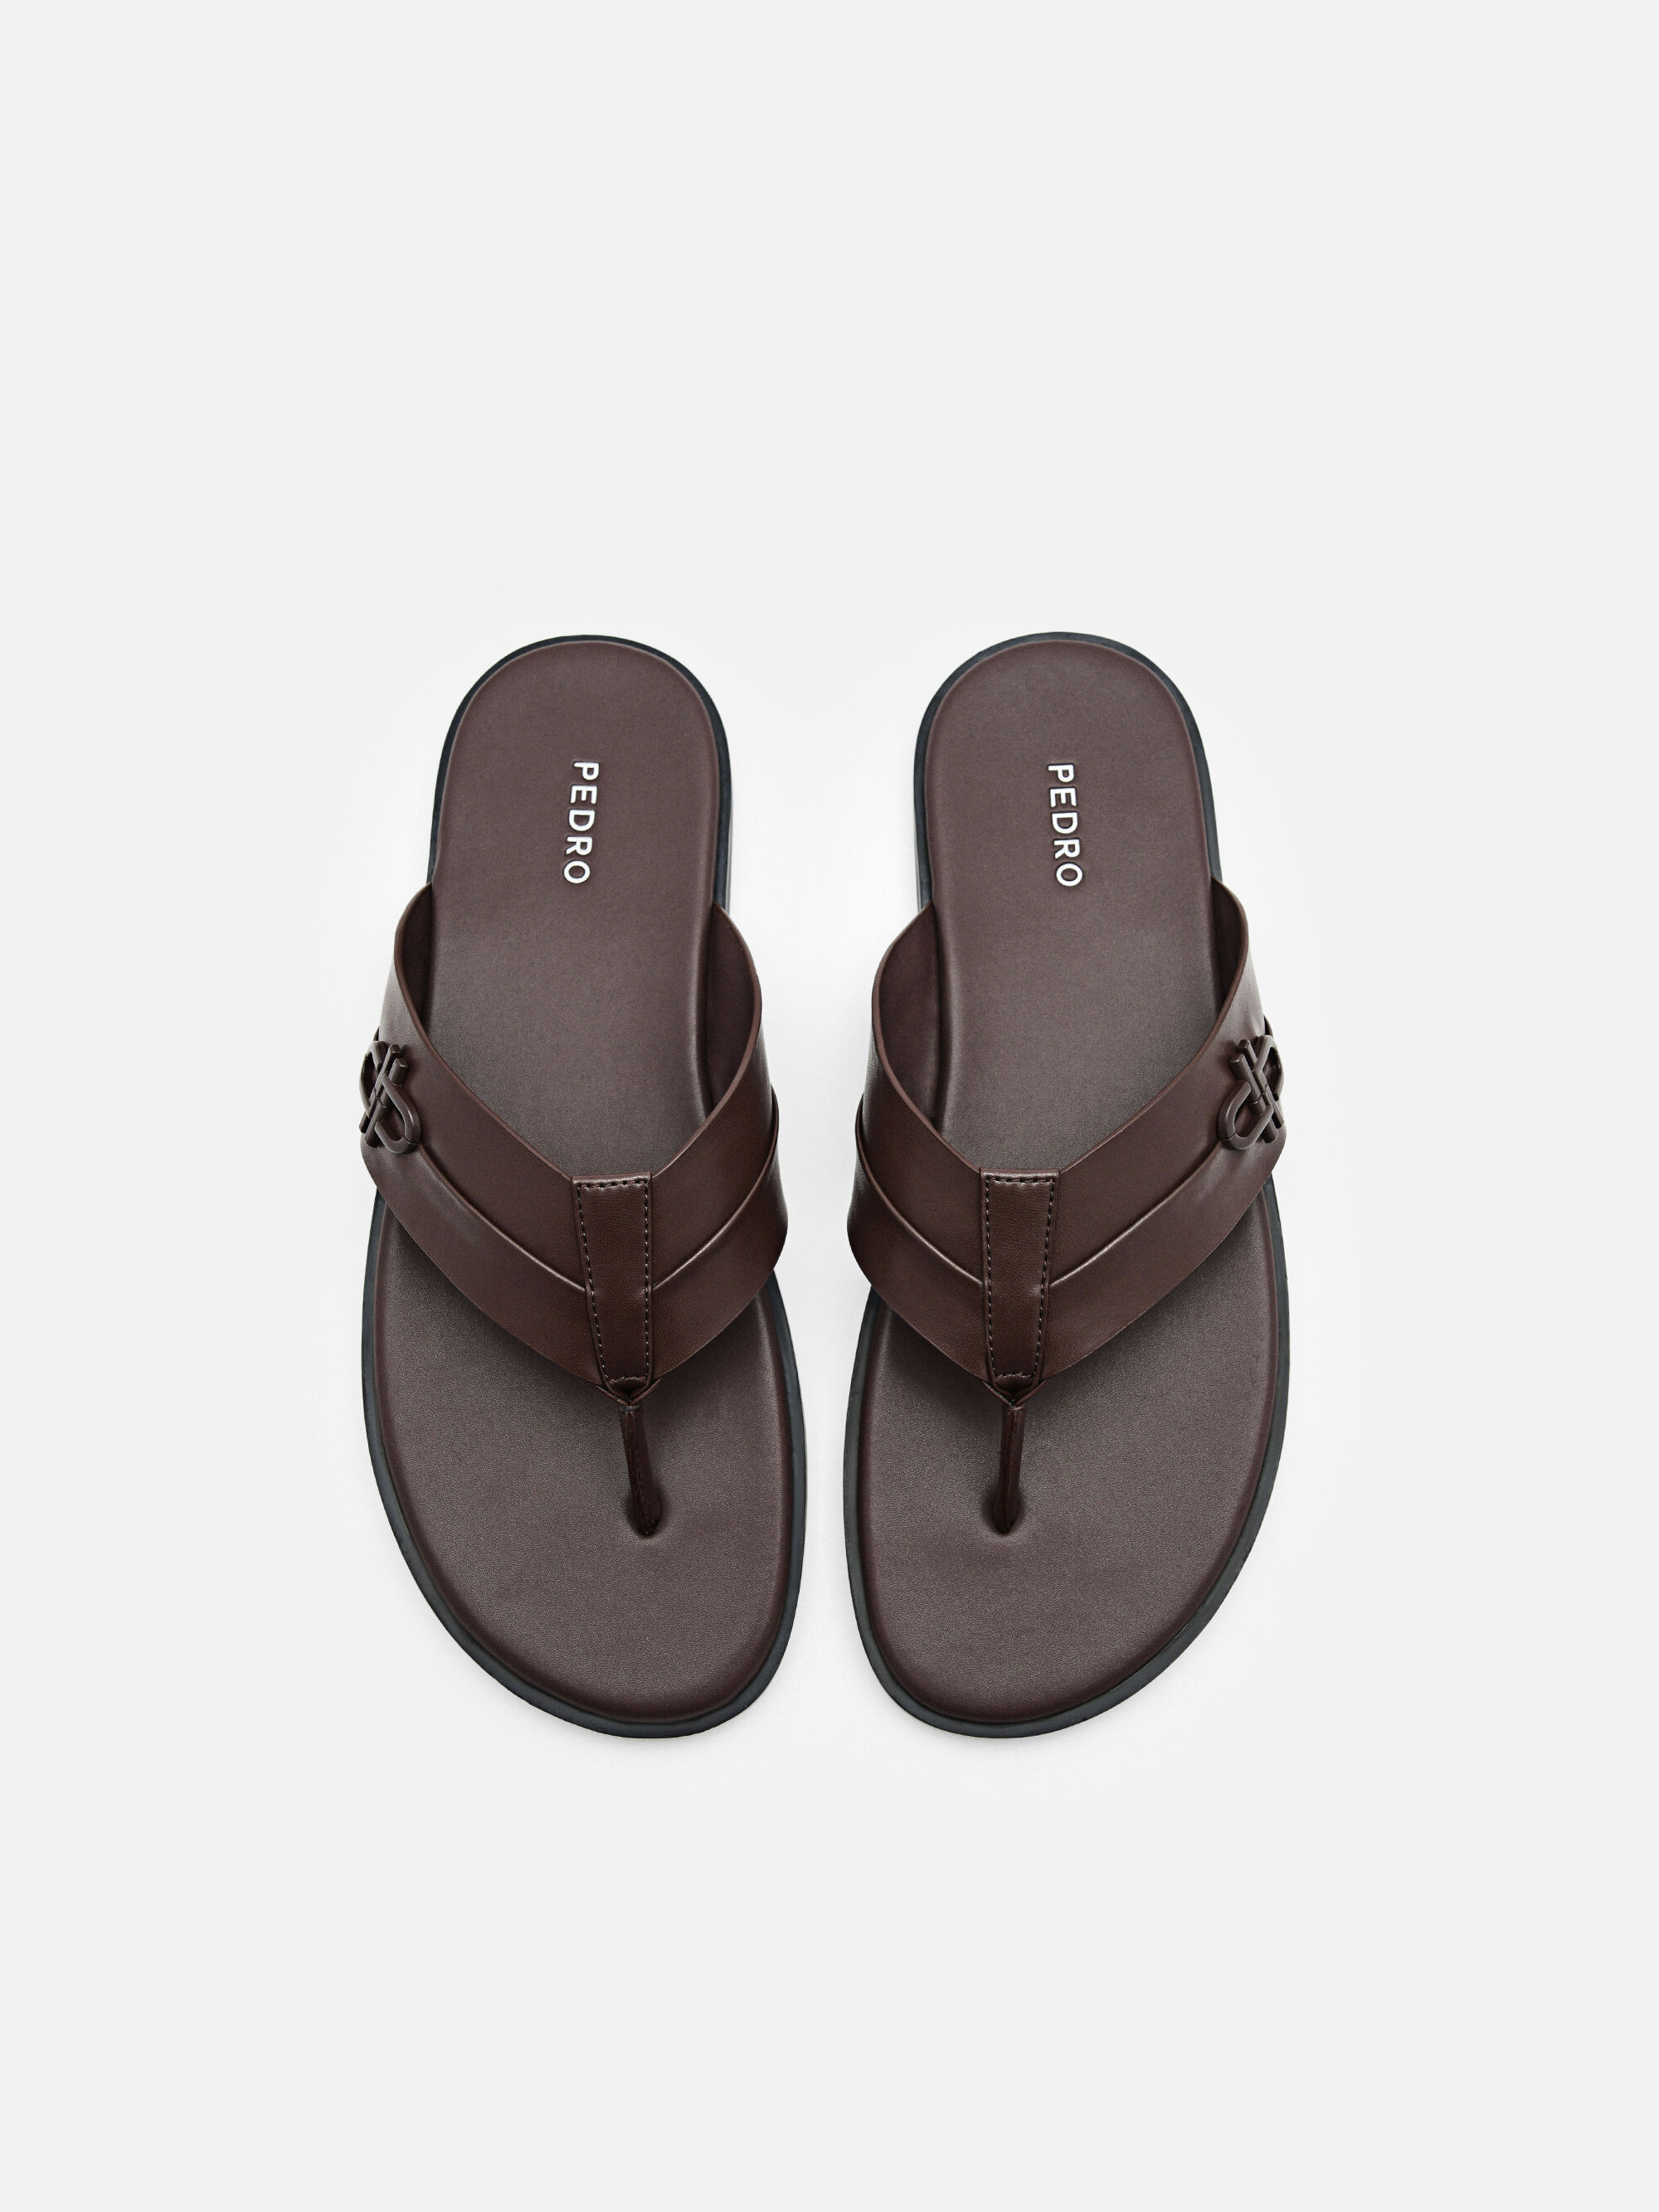 PEDRO Icon Thong Sandals, Dark Brown